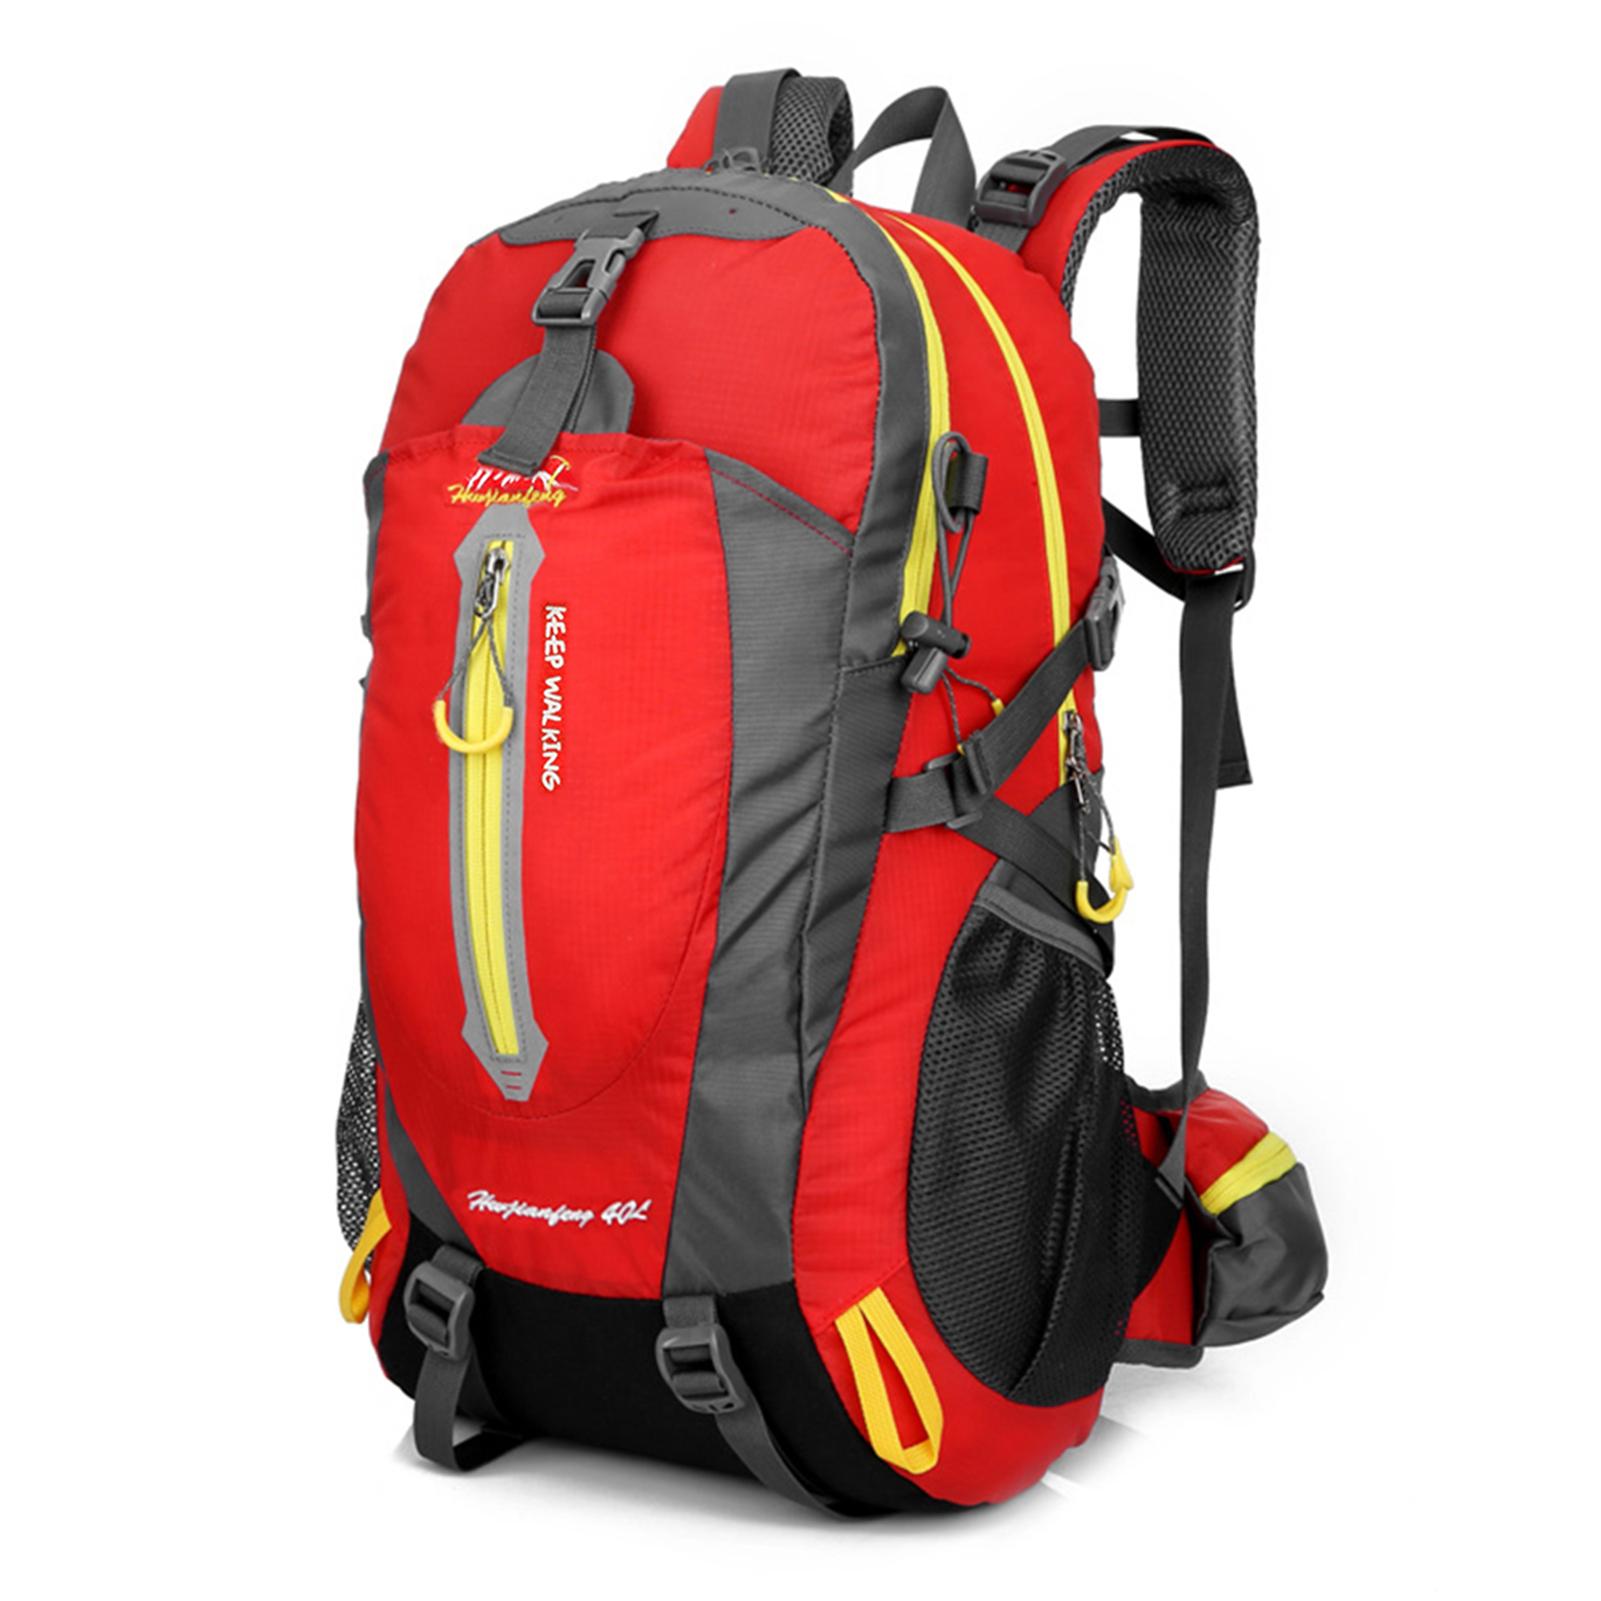 40L Water Resistant Travel Camp Hike Laptop Daypack Trekking Climb Back Bags For Men Women - image 1 of 7